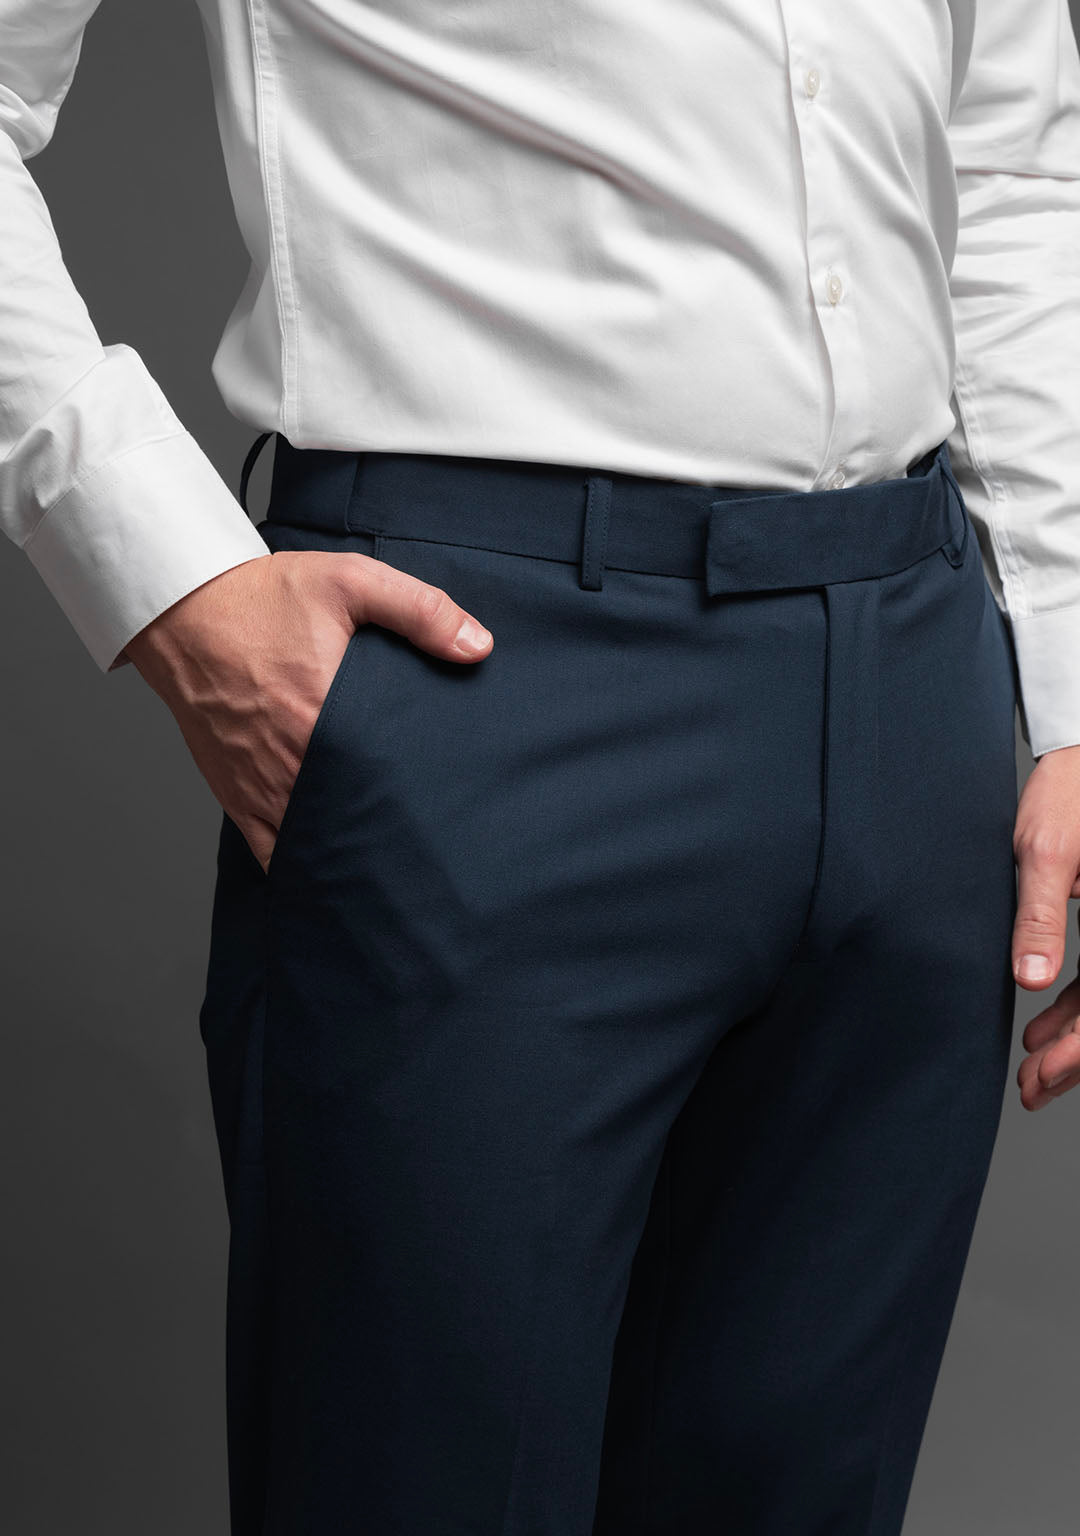 Arctic Dust Colour Formal Trousers for Men - Elite Trouser by Aristobrat